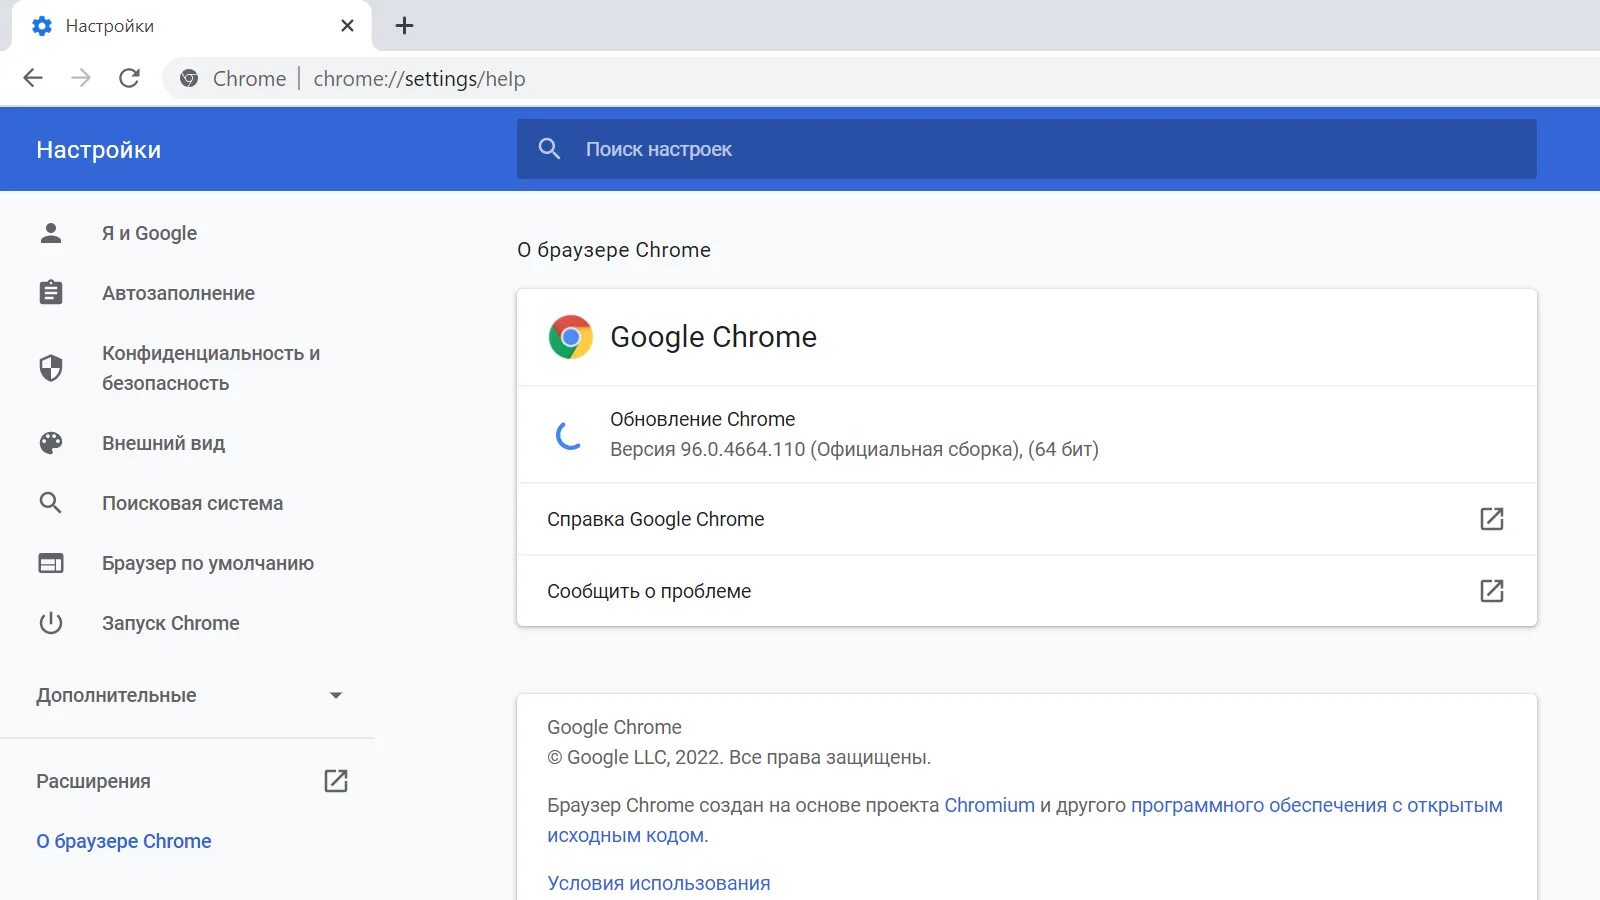 Установлена последняя версия chrome. Google Chrome обновление. Последняя версия Chrome. Google Chrome возможности браузера. Установка браузера гугл.